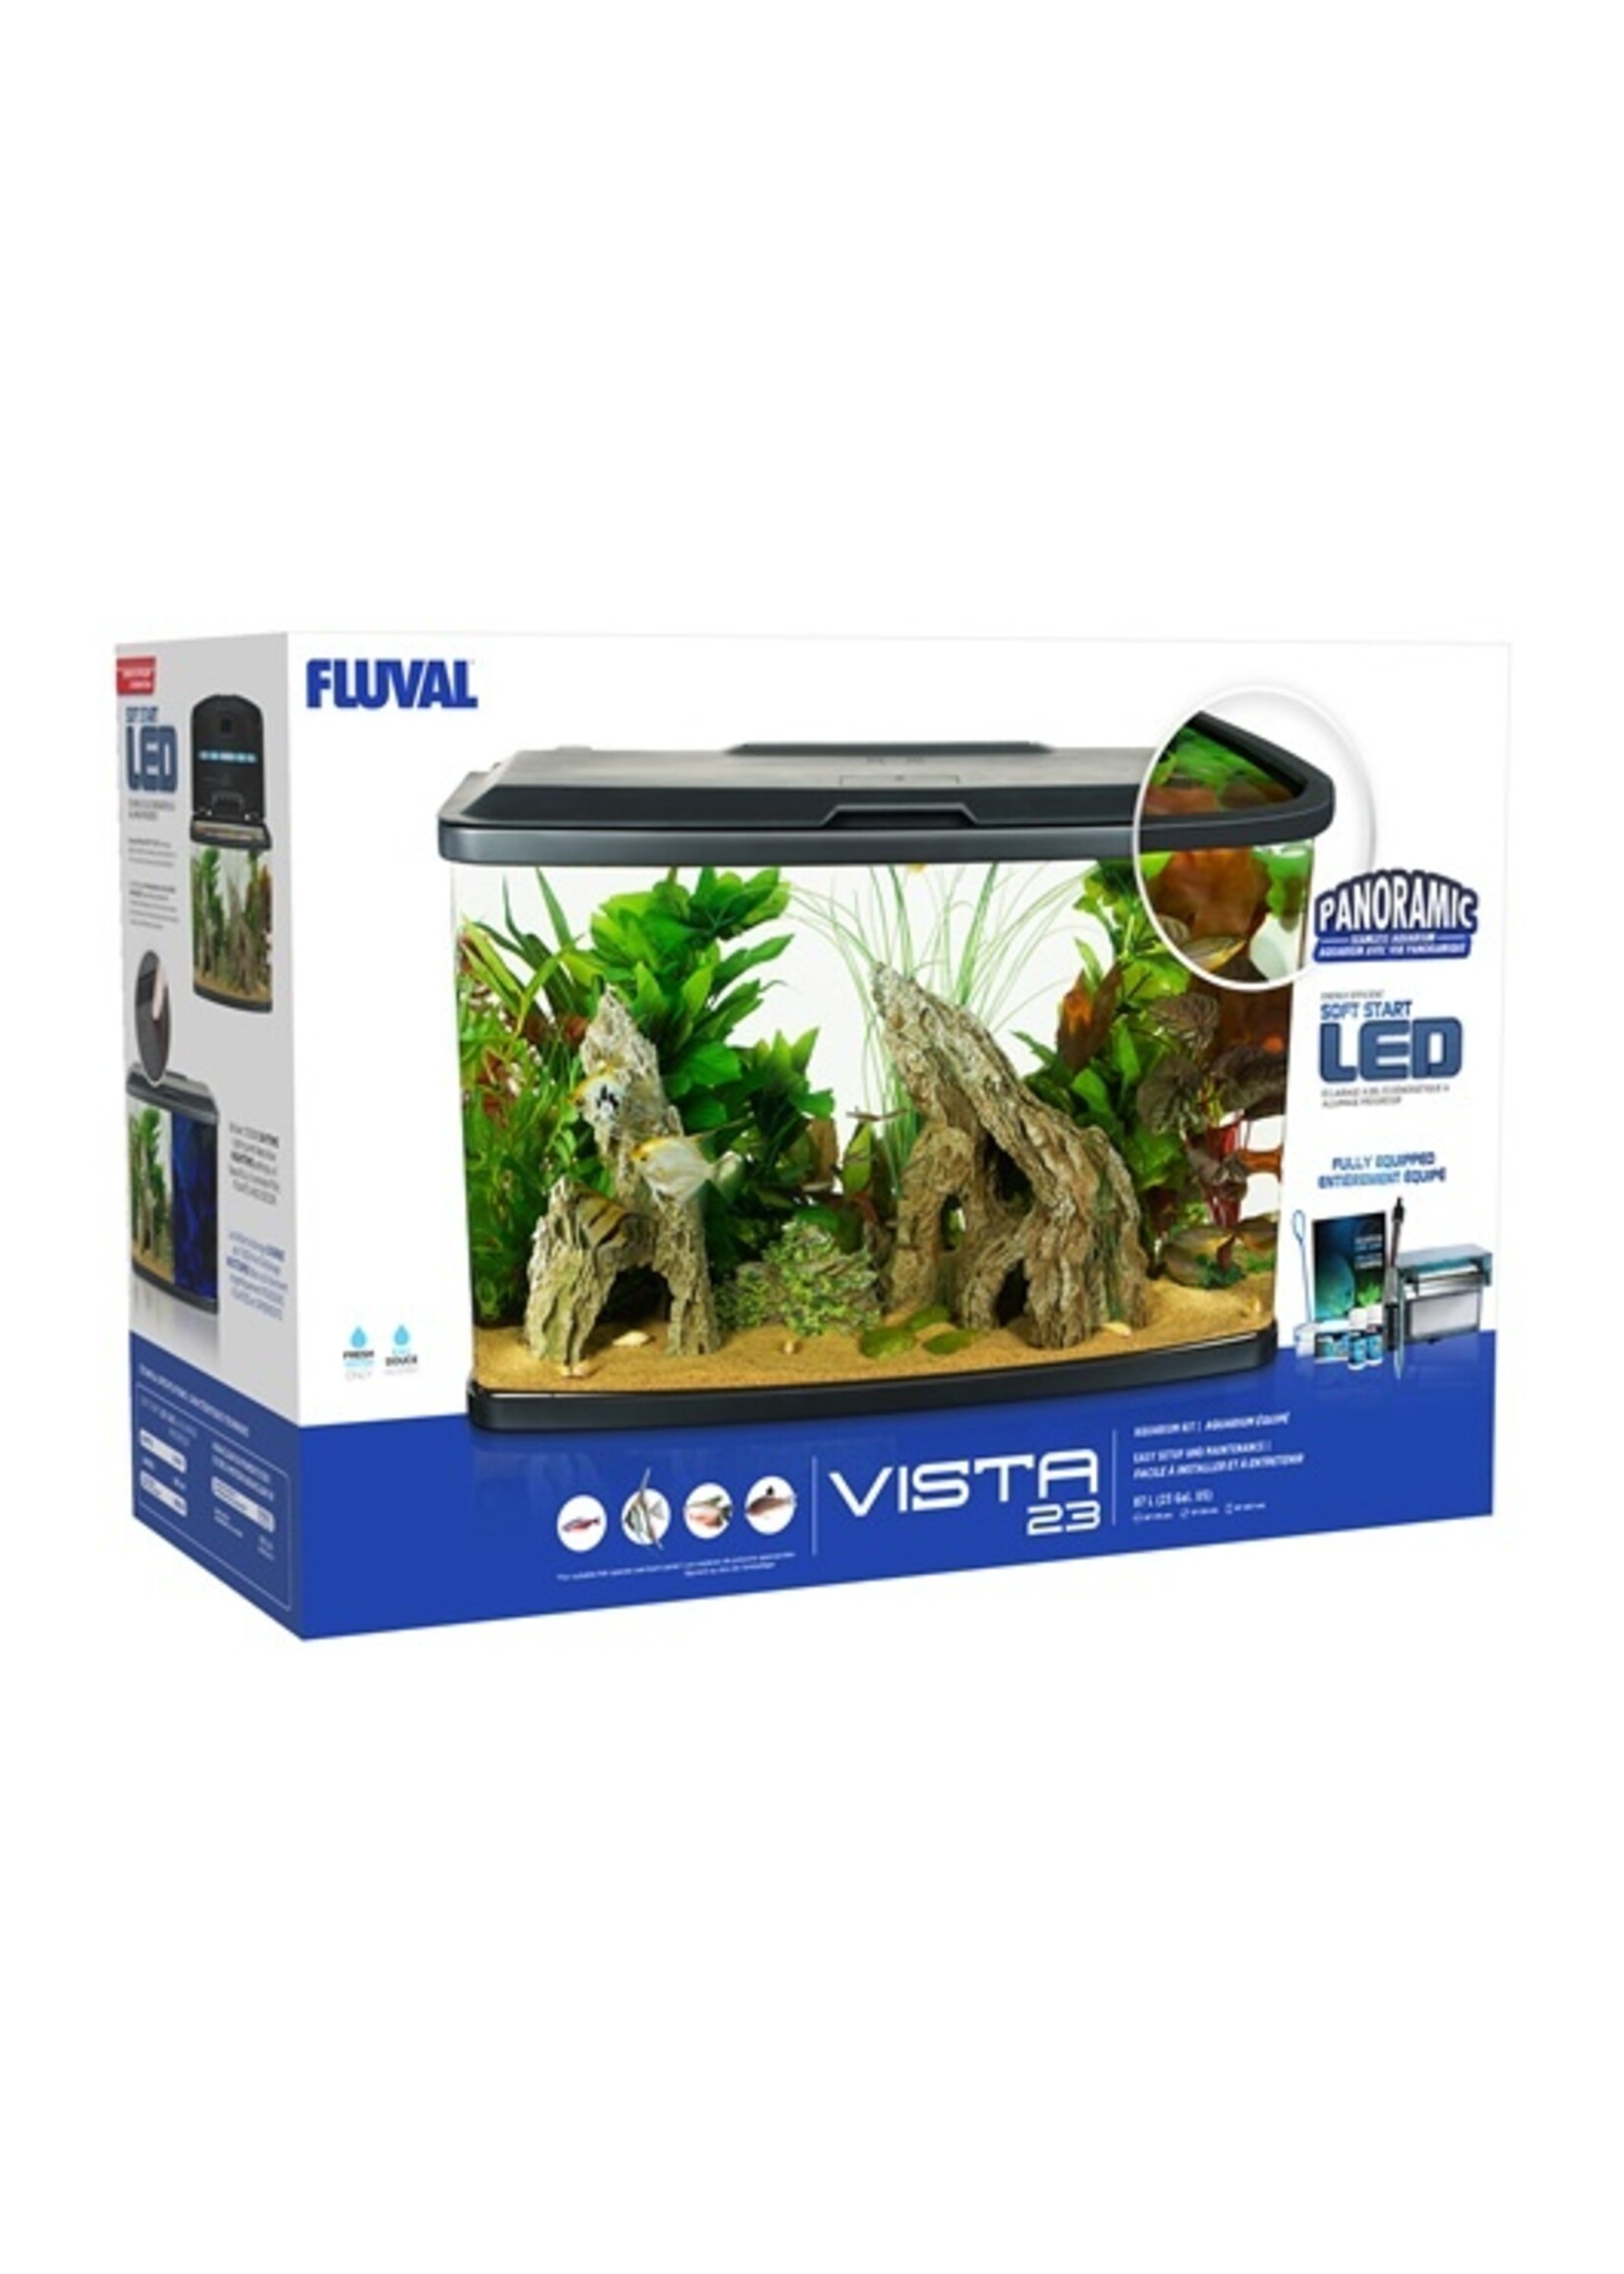 Fluval Fluval Vista Aquarium Kit